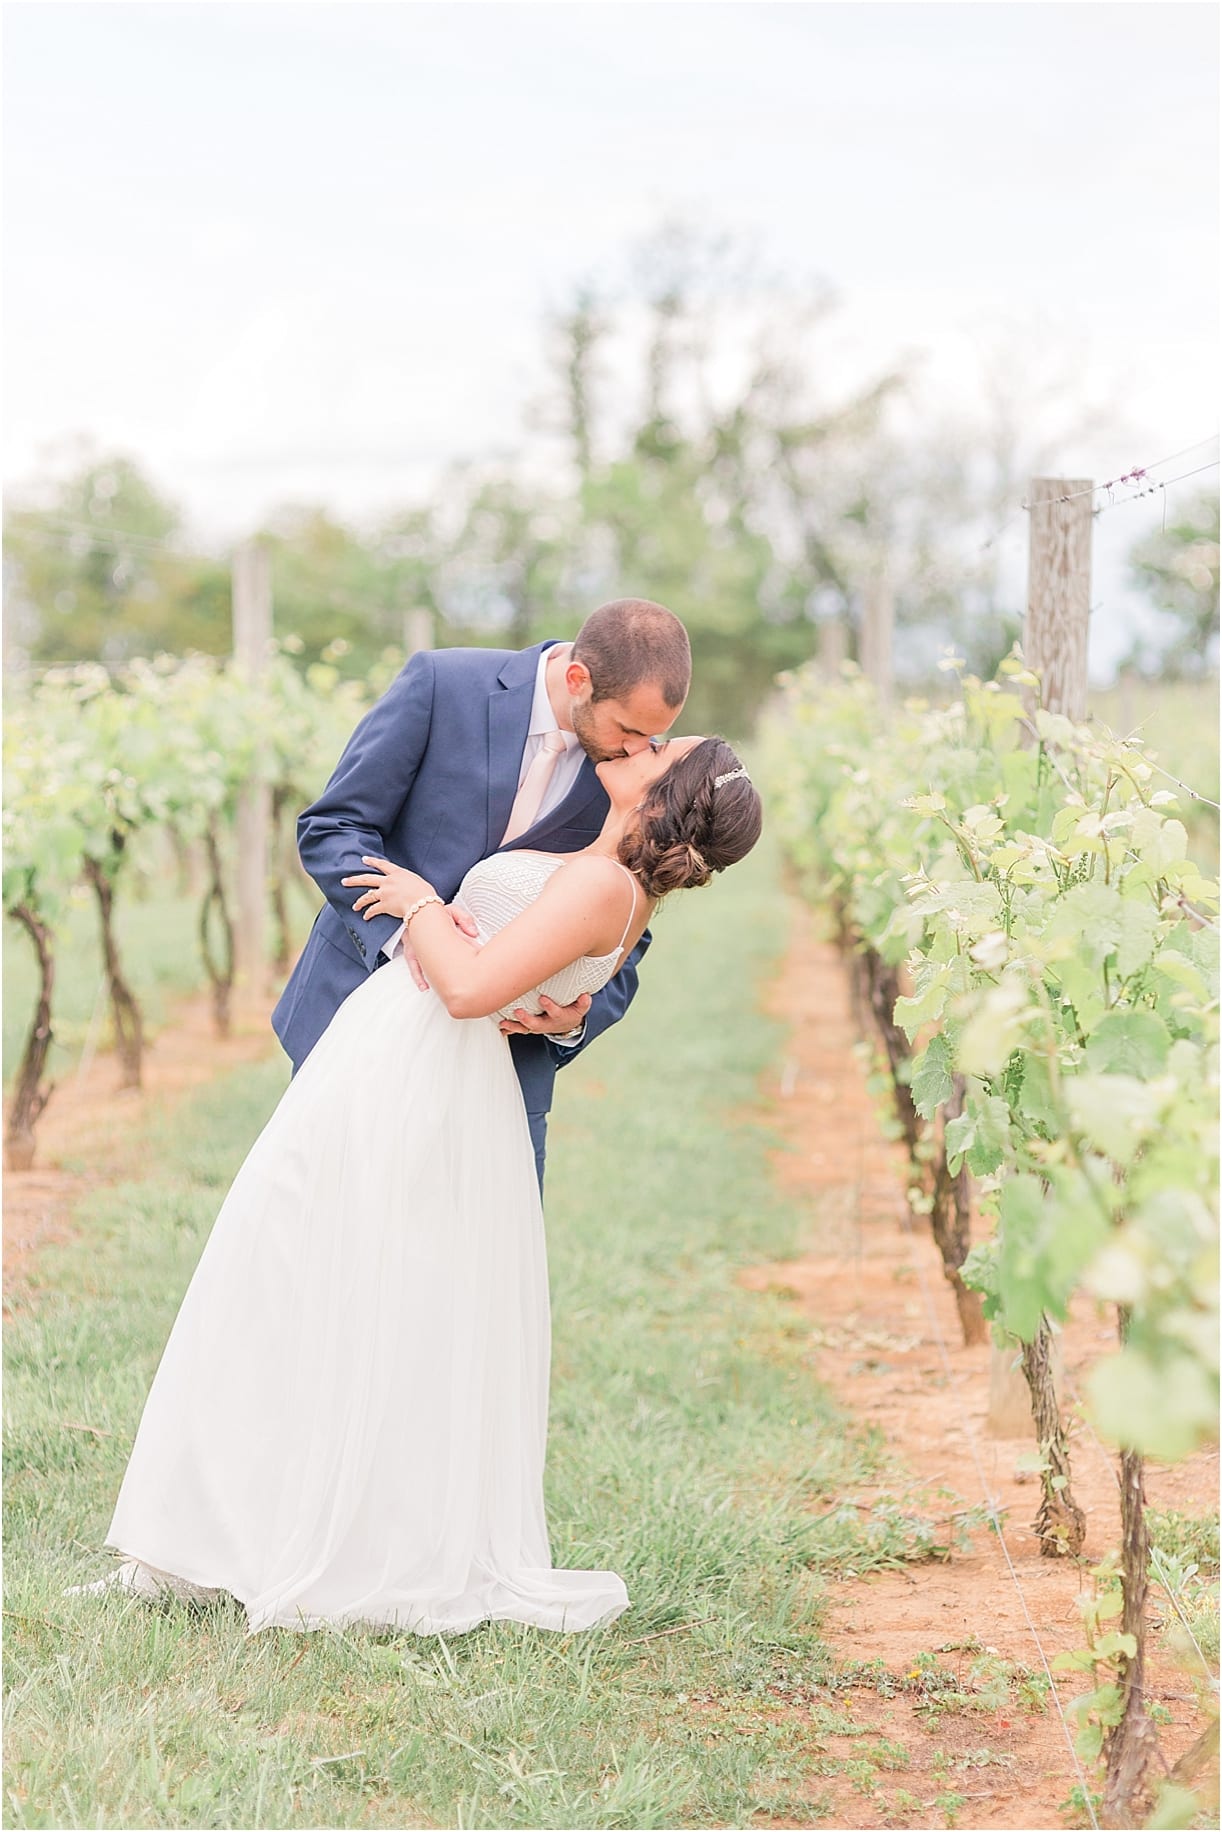 Spring Vineyard Wedding | Hill City Bride Virginia Wedding Blog - Jessica Green Photography - kiss groom